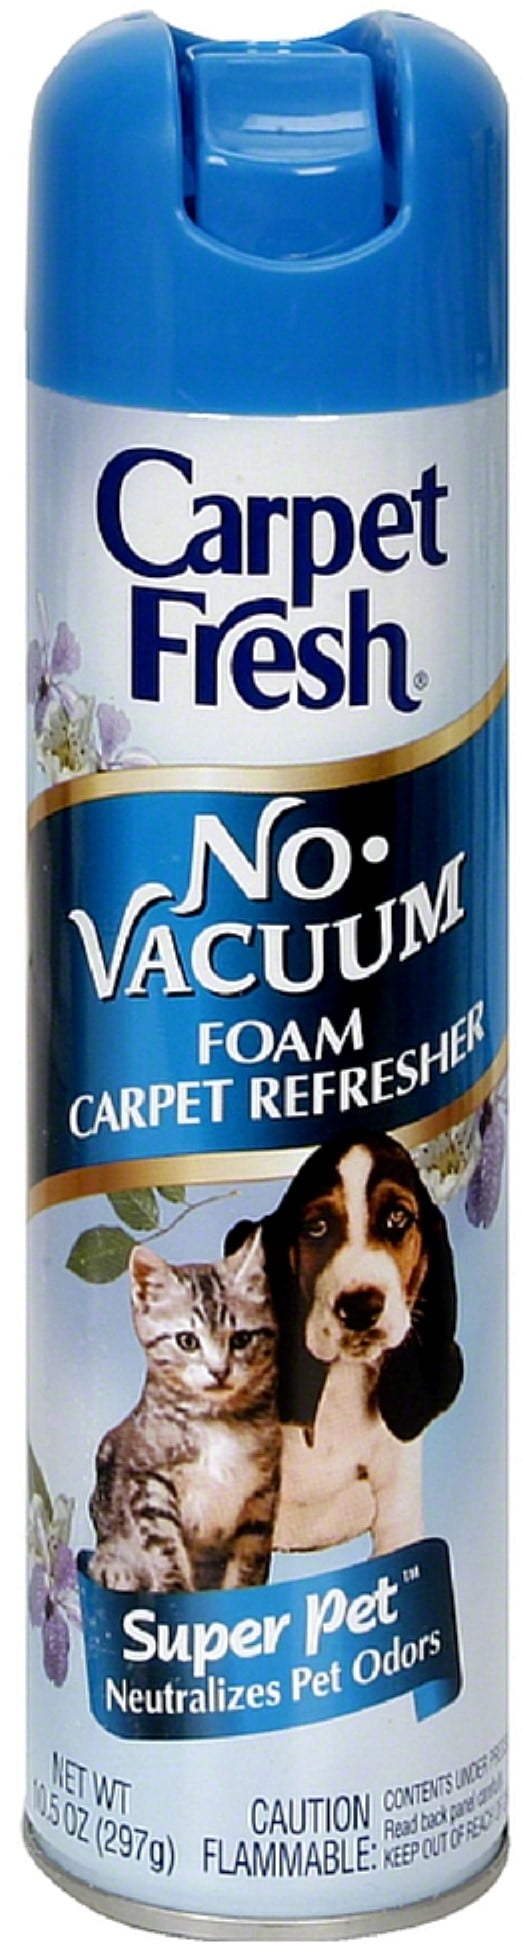 WD-40 Carpet Fresh No Vacuum Foam Carpet Refresher (28030CT)